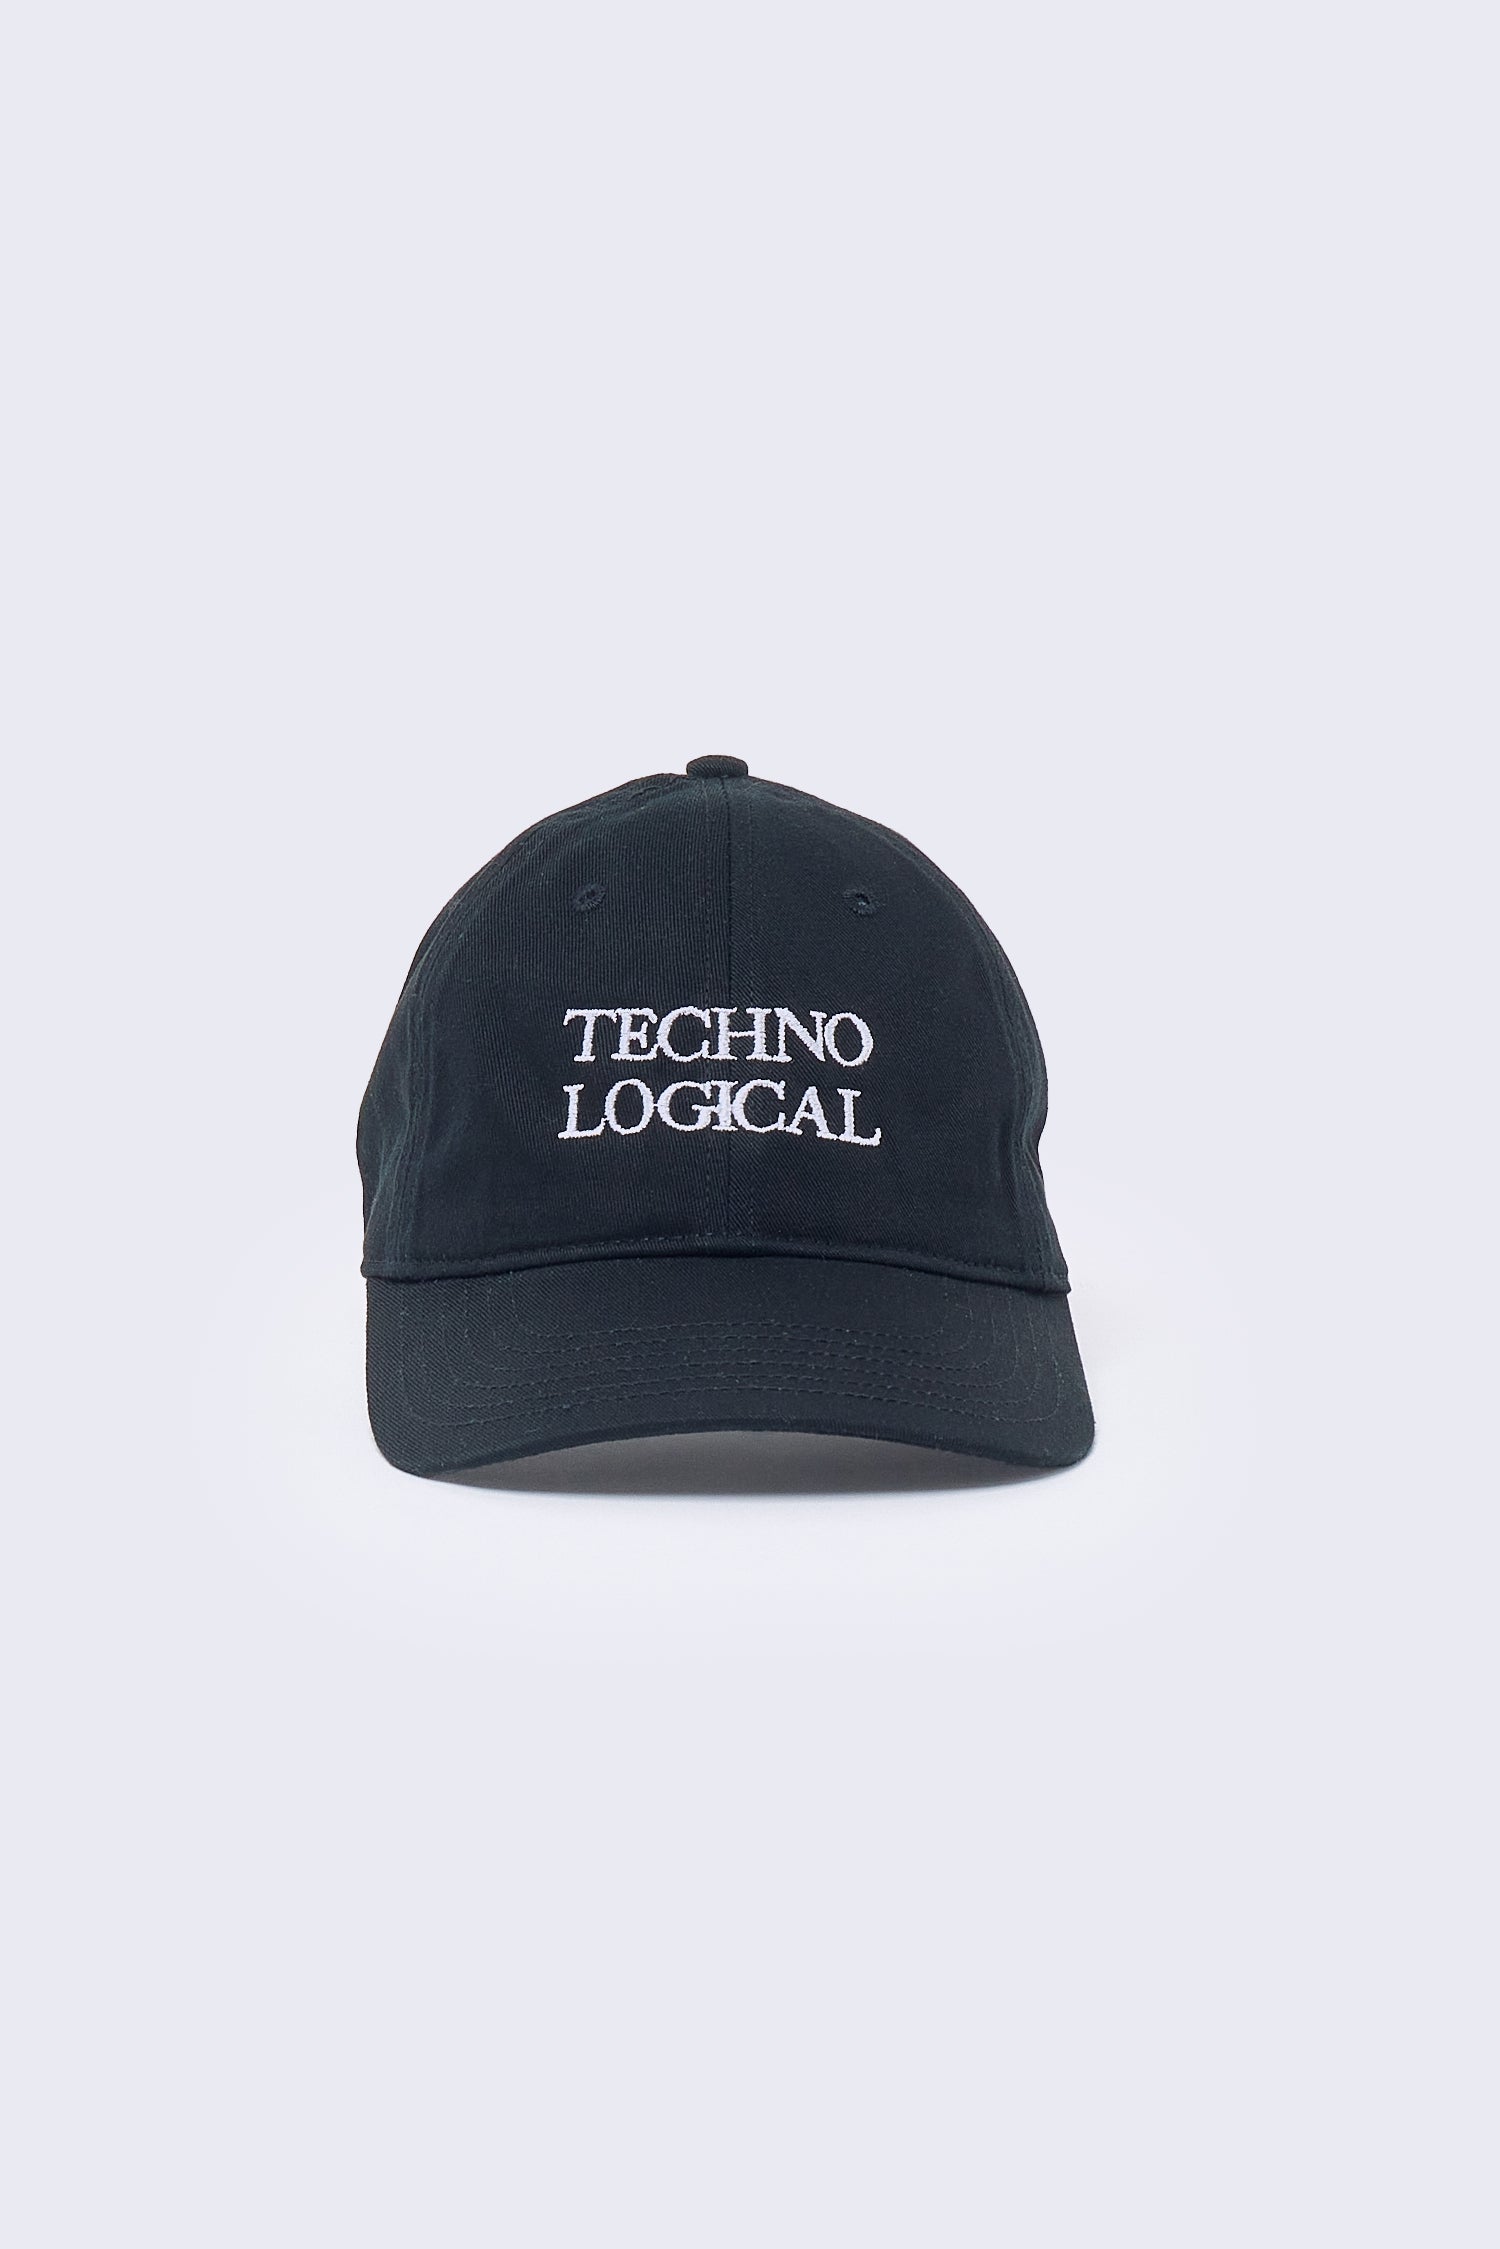 Techno Logical Cap